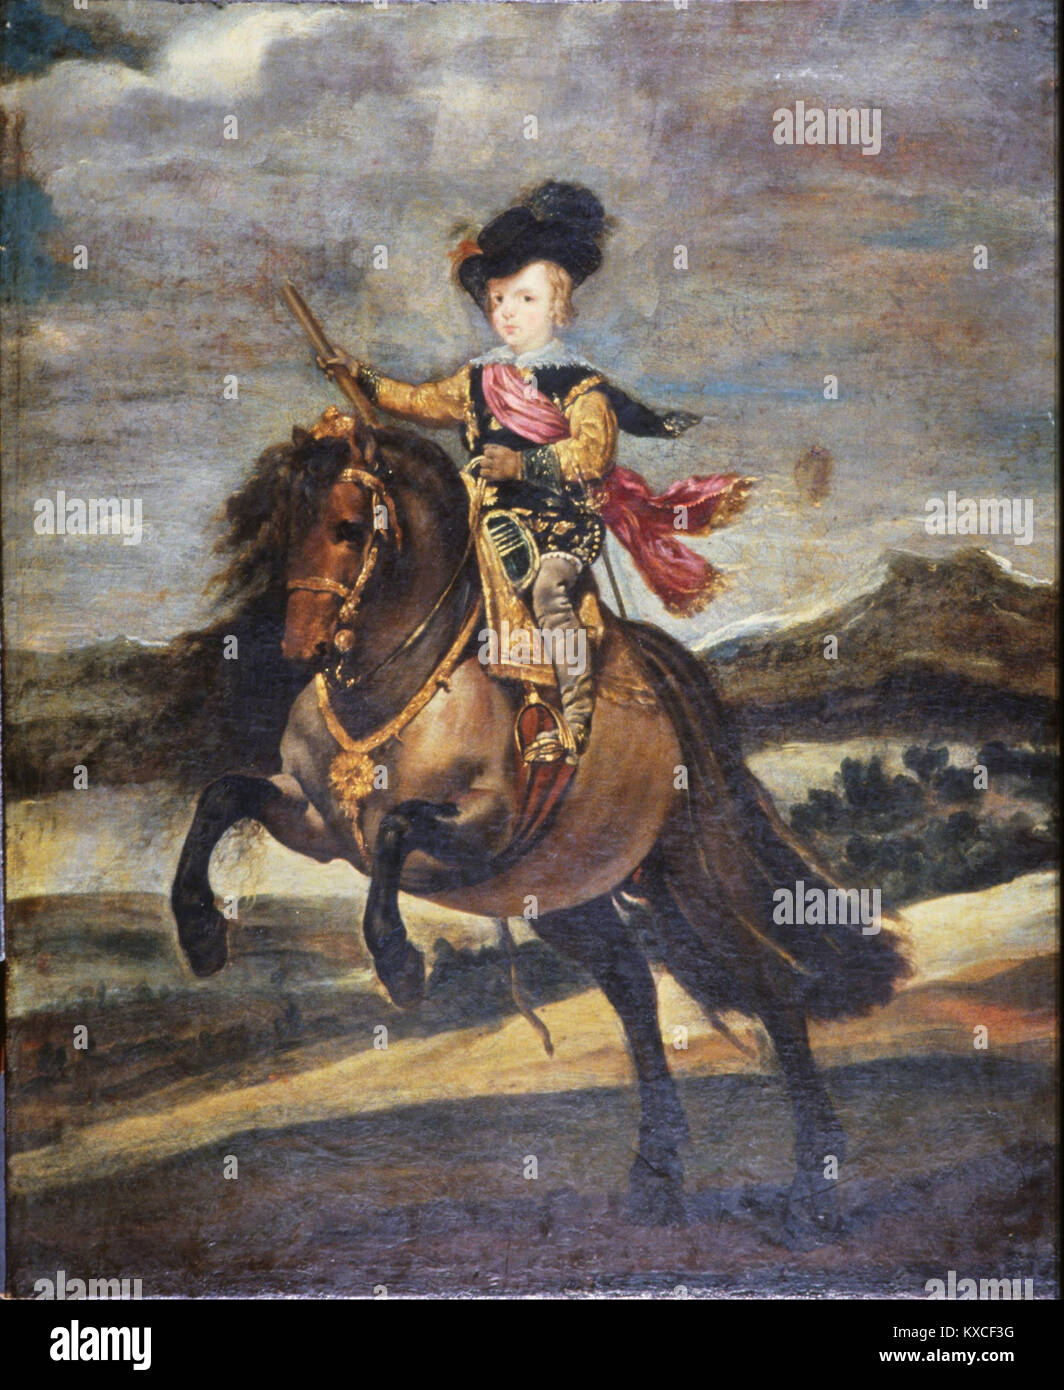 Velázquez, Diego Rodríguez de Silva y - The Infante Baltasar Carlos on Horseback - Google Art Project Stock Photo